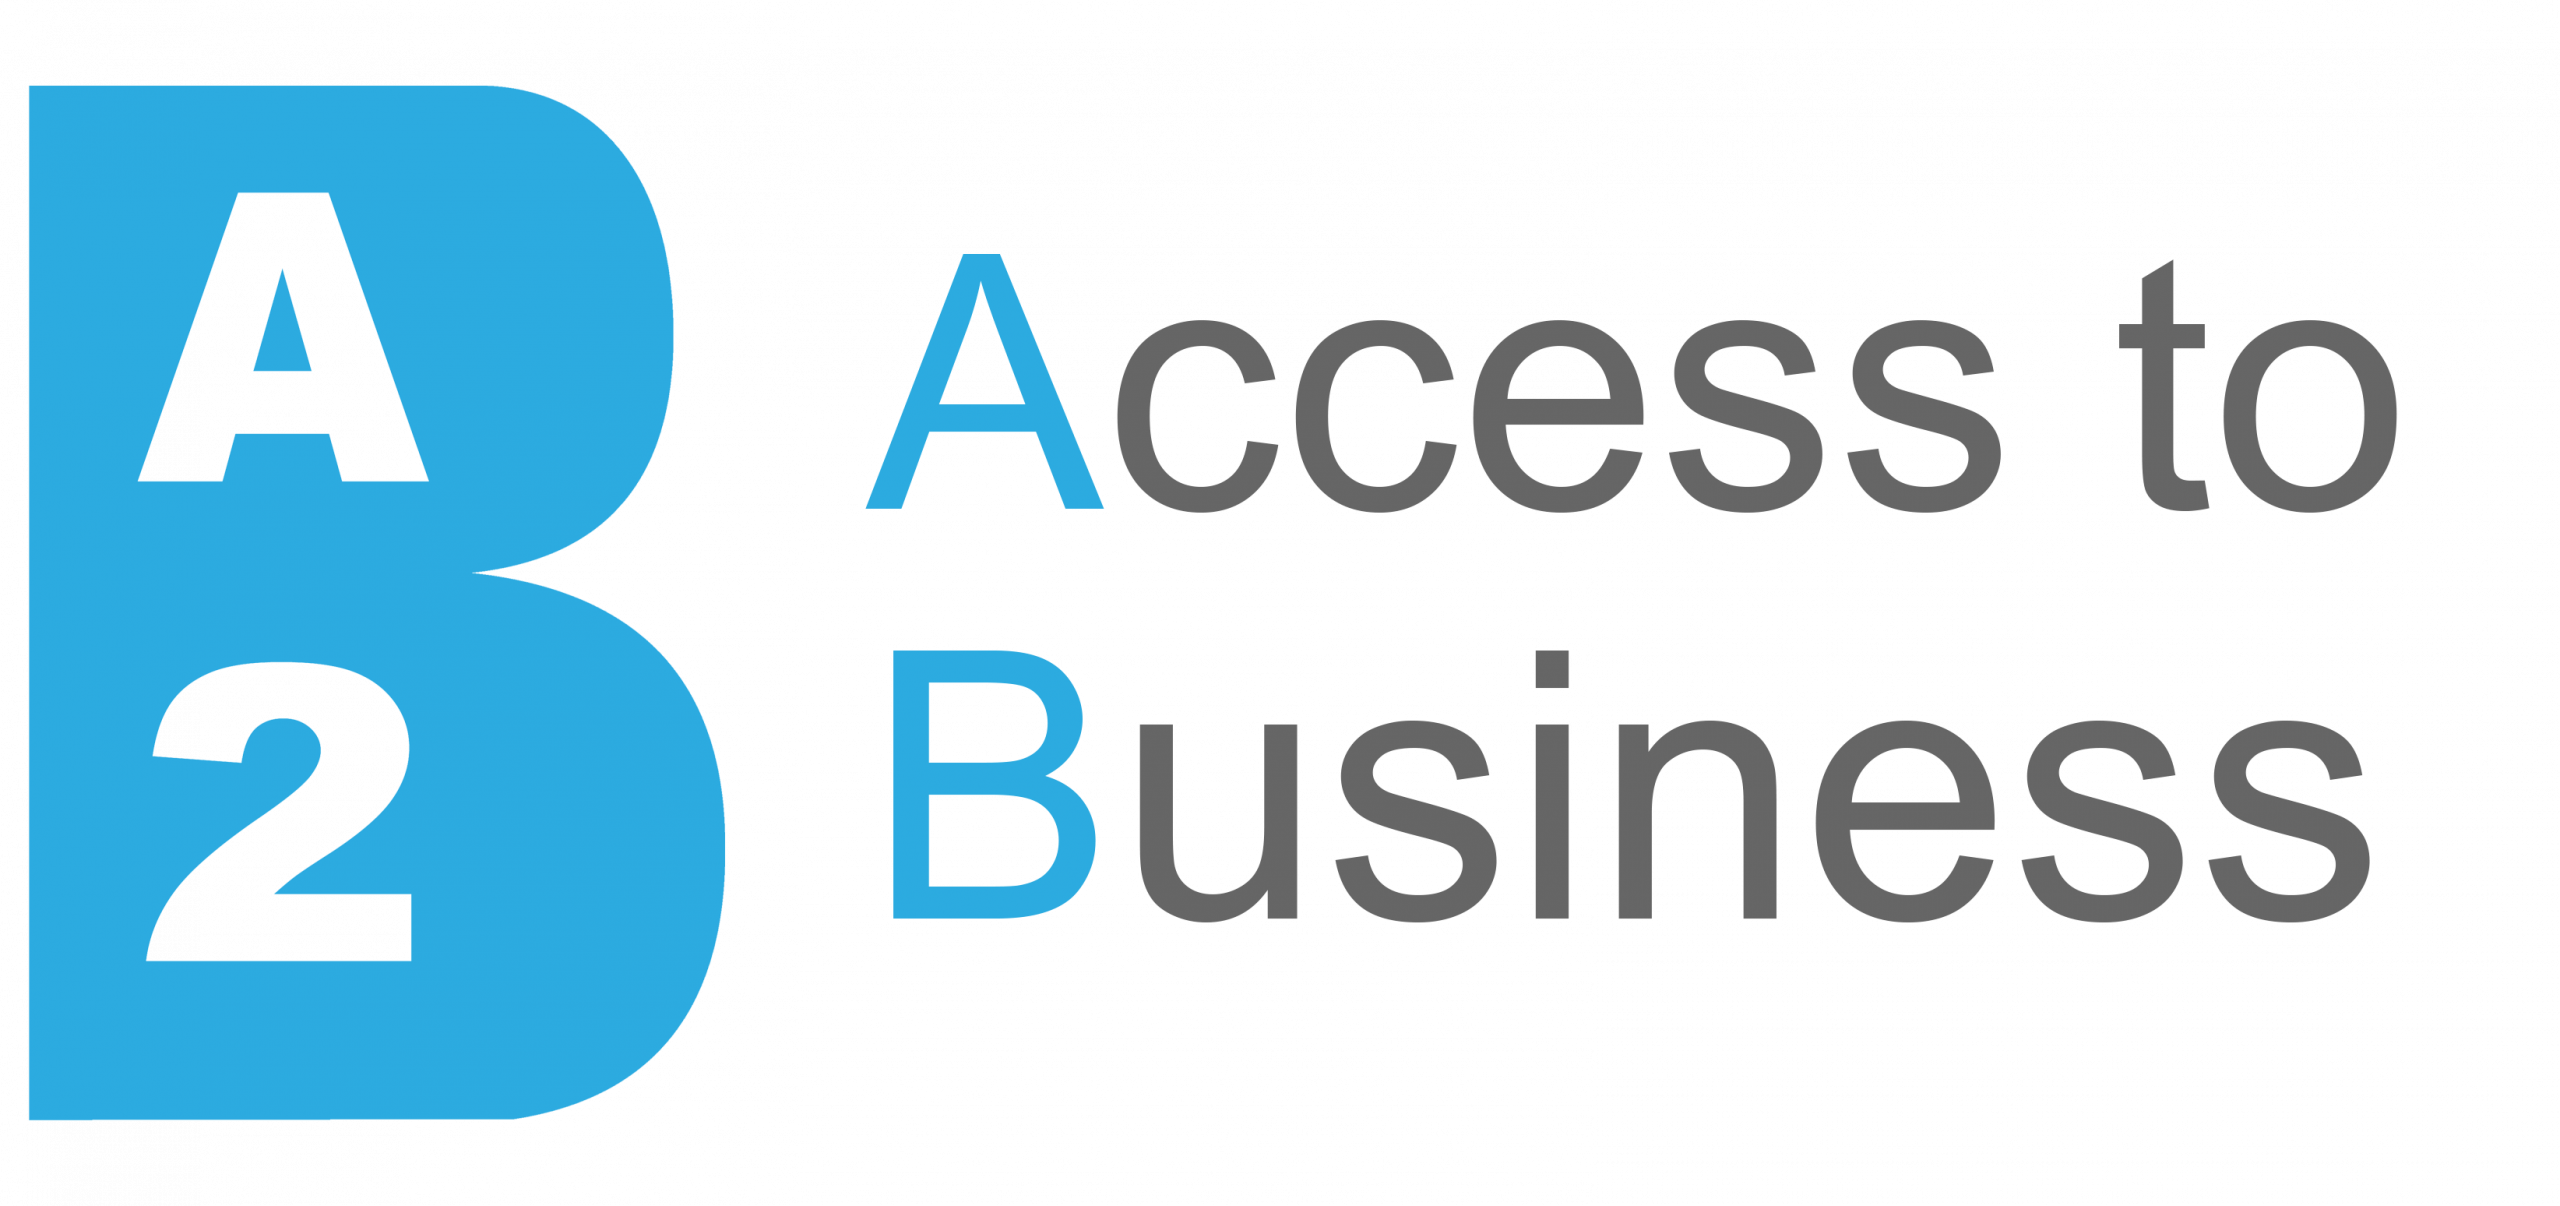 (c) Access2business.co.uk